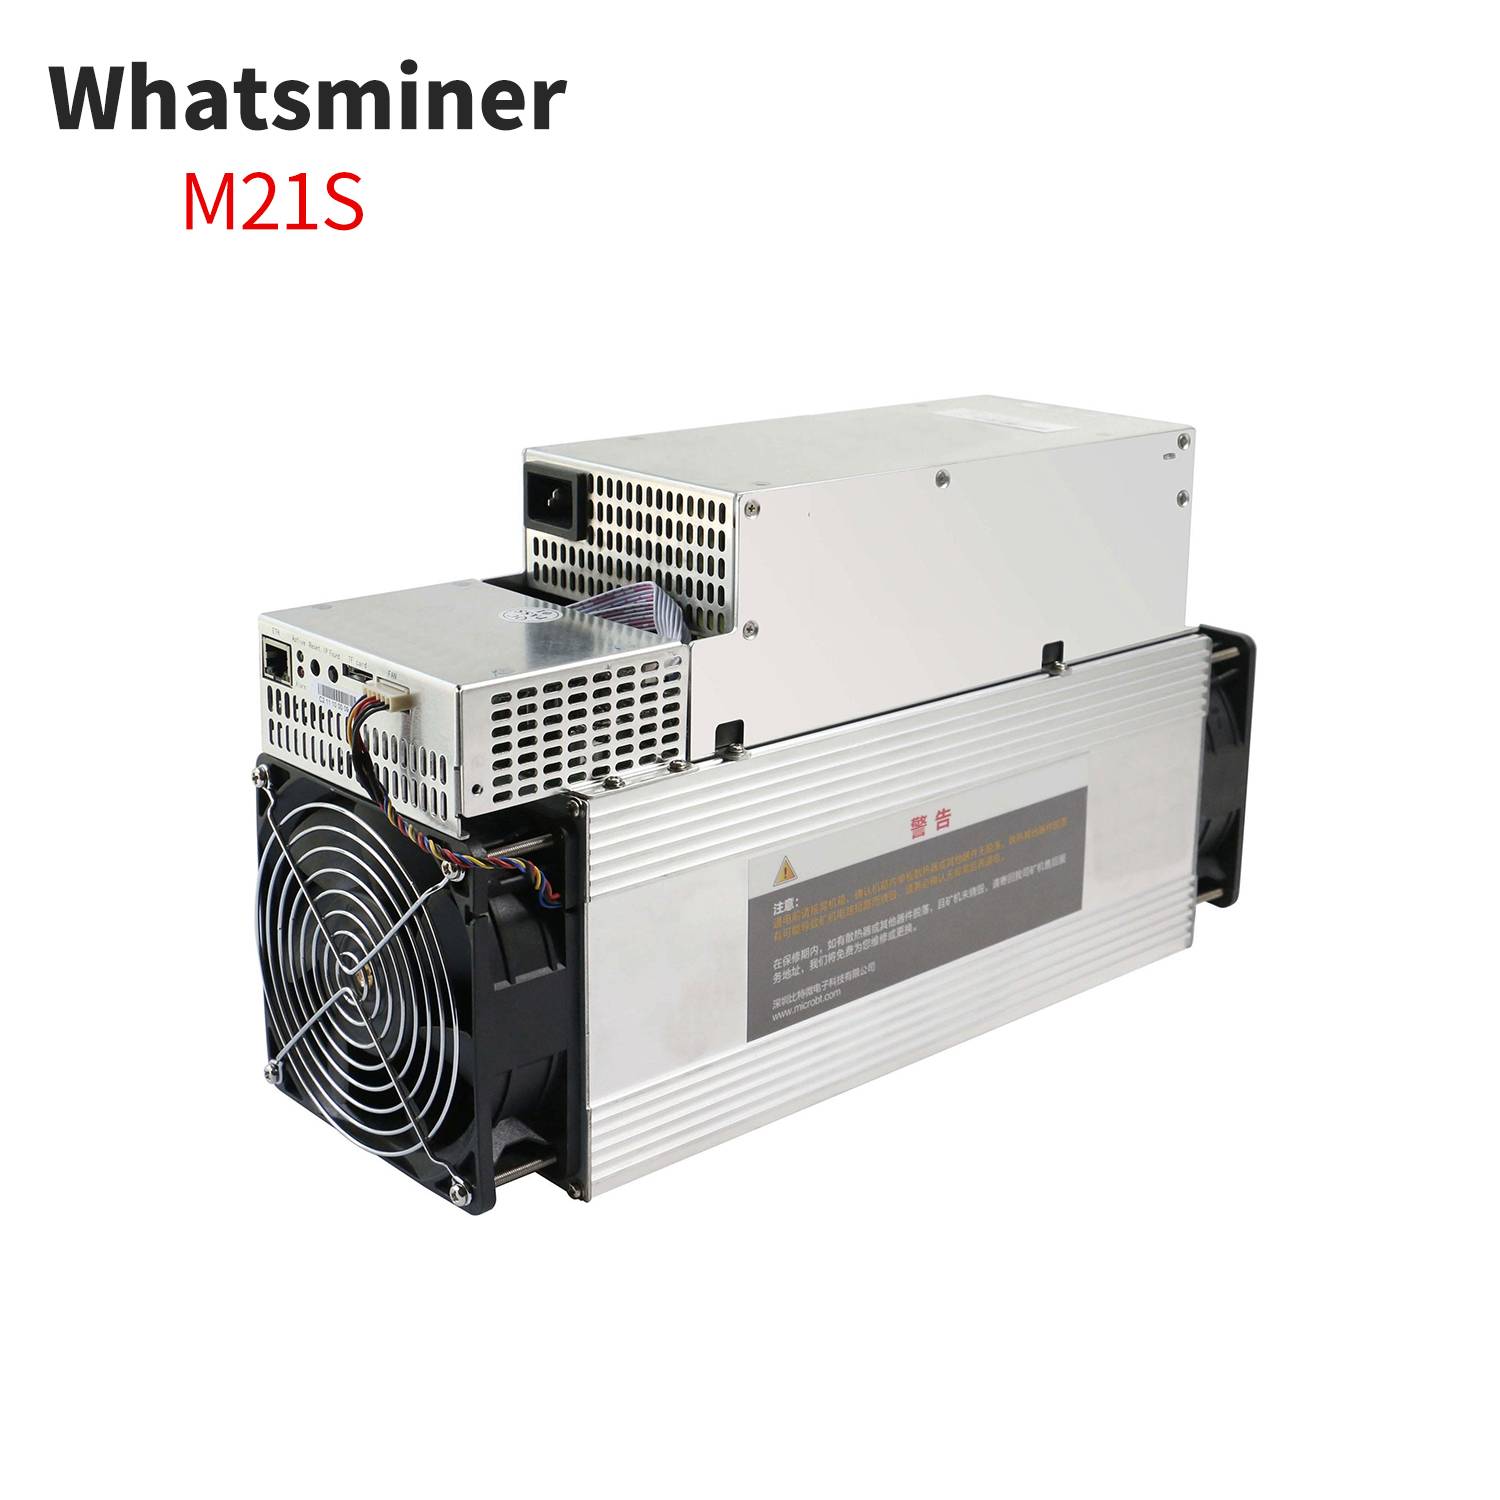 China 2020 Top3 Short ROI Asic Miner Microbt Whatsminer ...